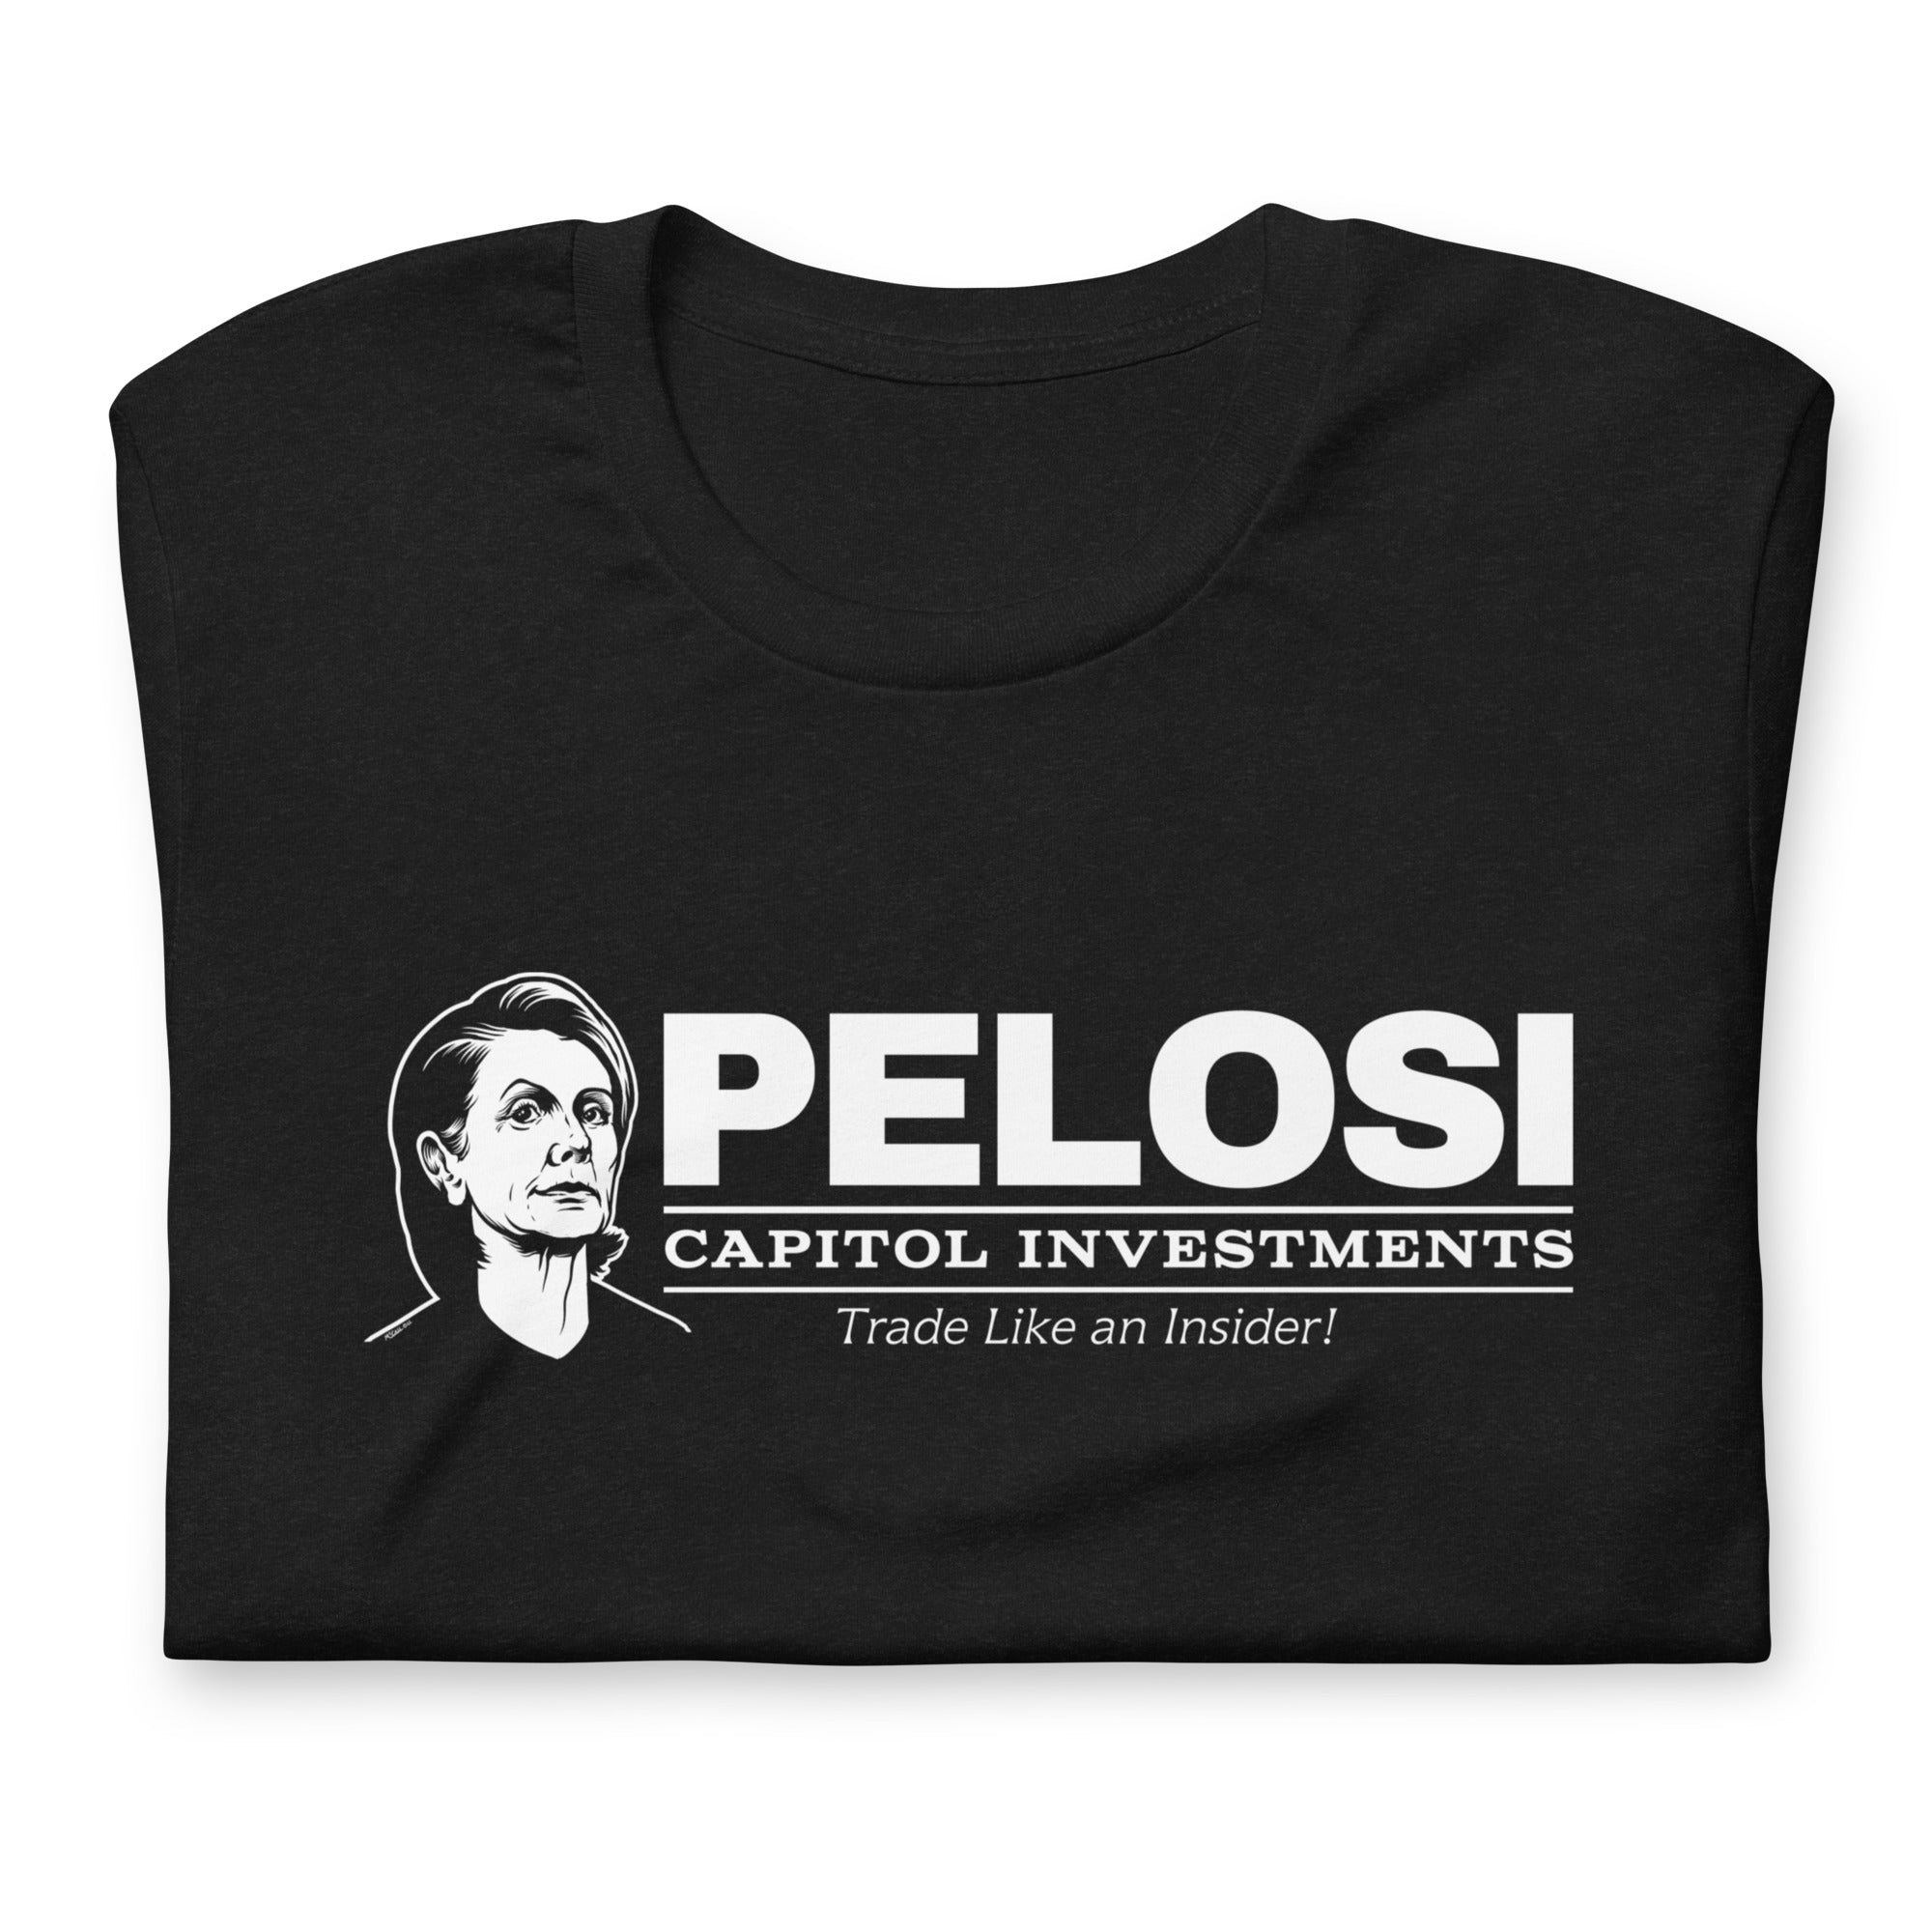 Pelosi Capitol Investments T-Shirt